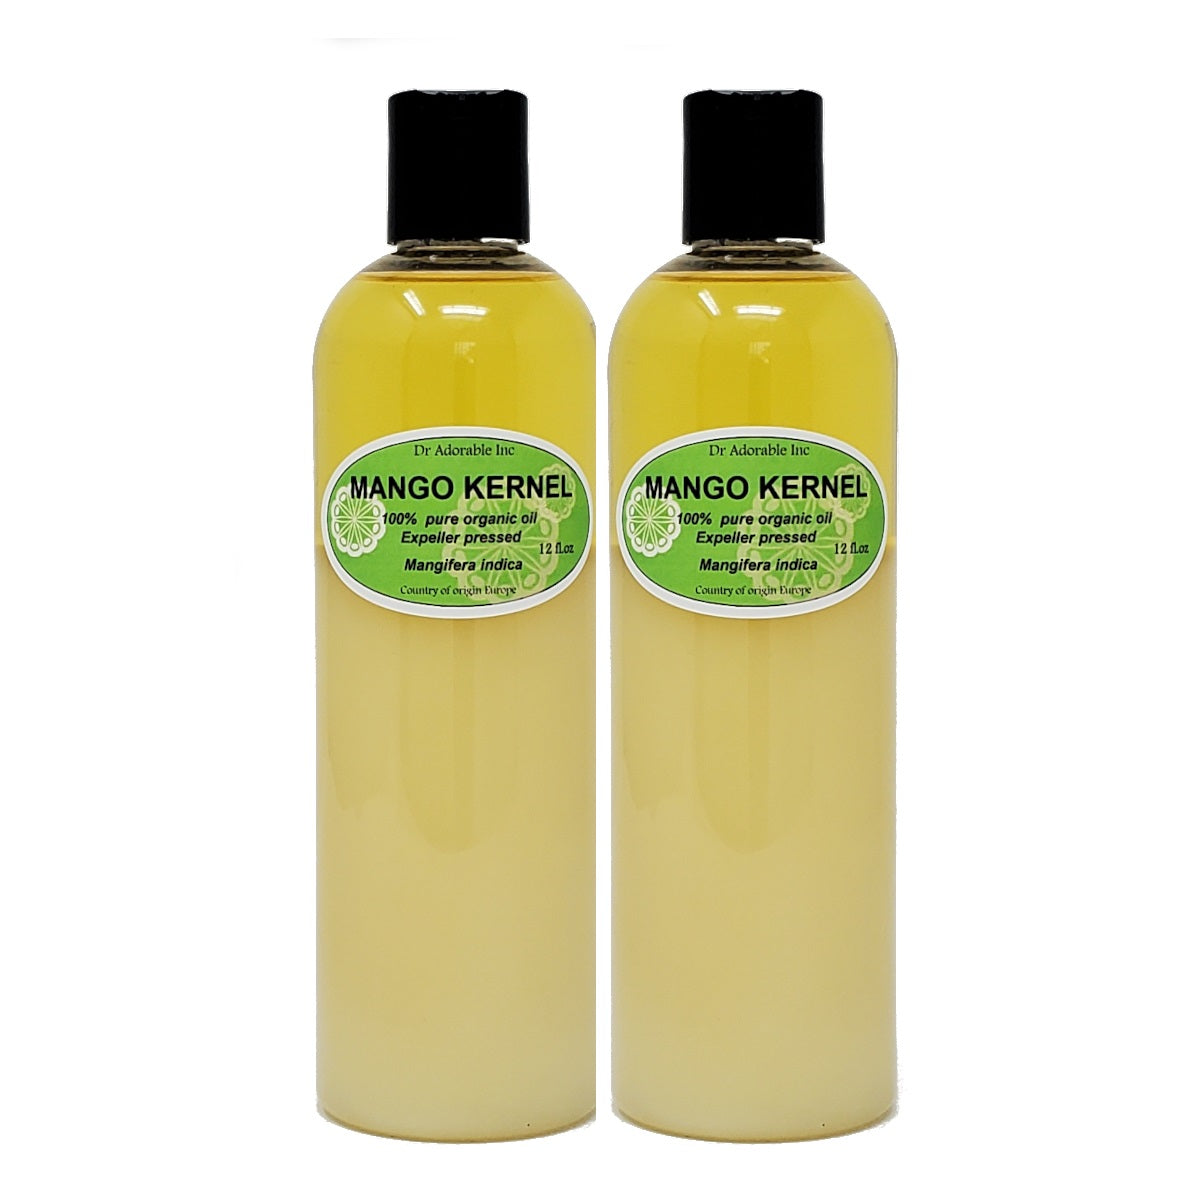 Mango Seed Oil - Organic 100% Pure Moisturizers Skin Care Bath and Beauty